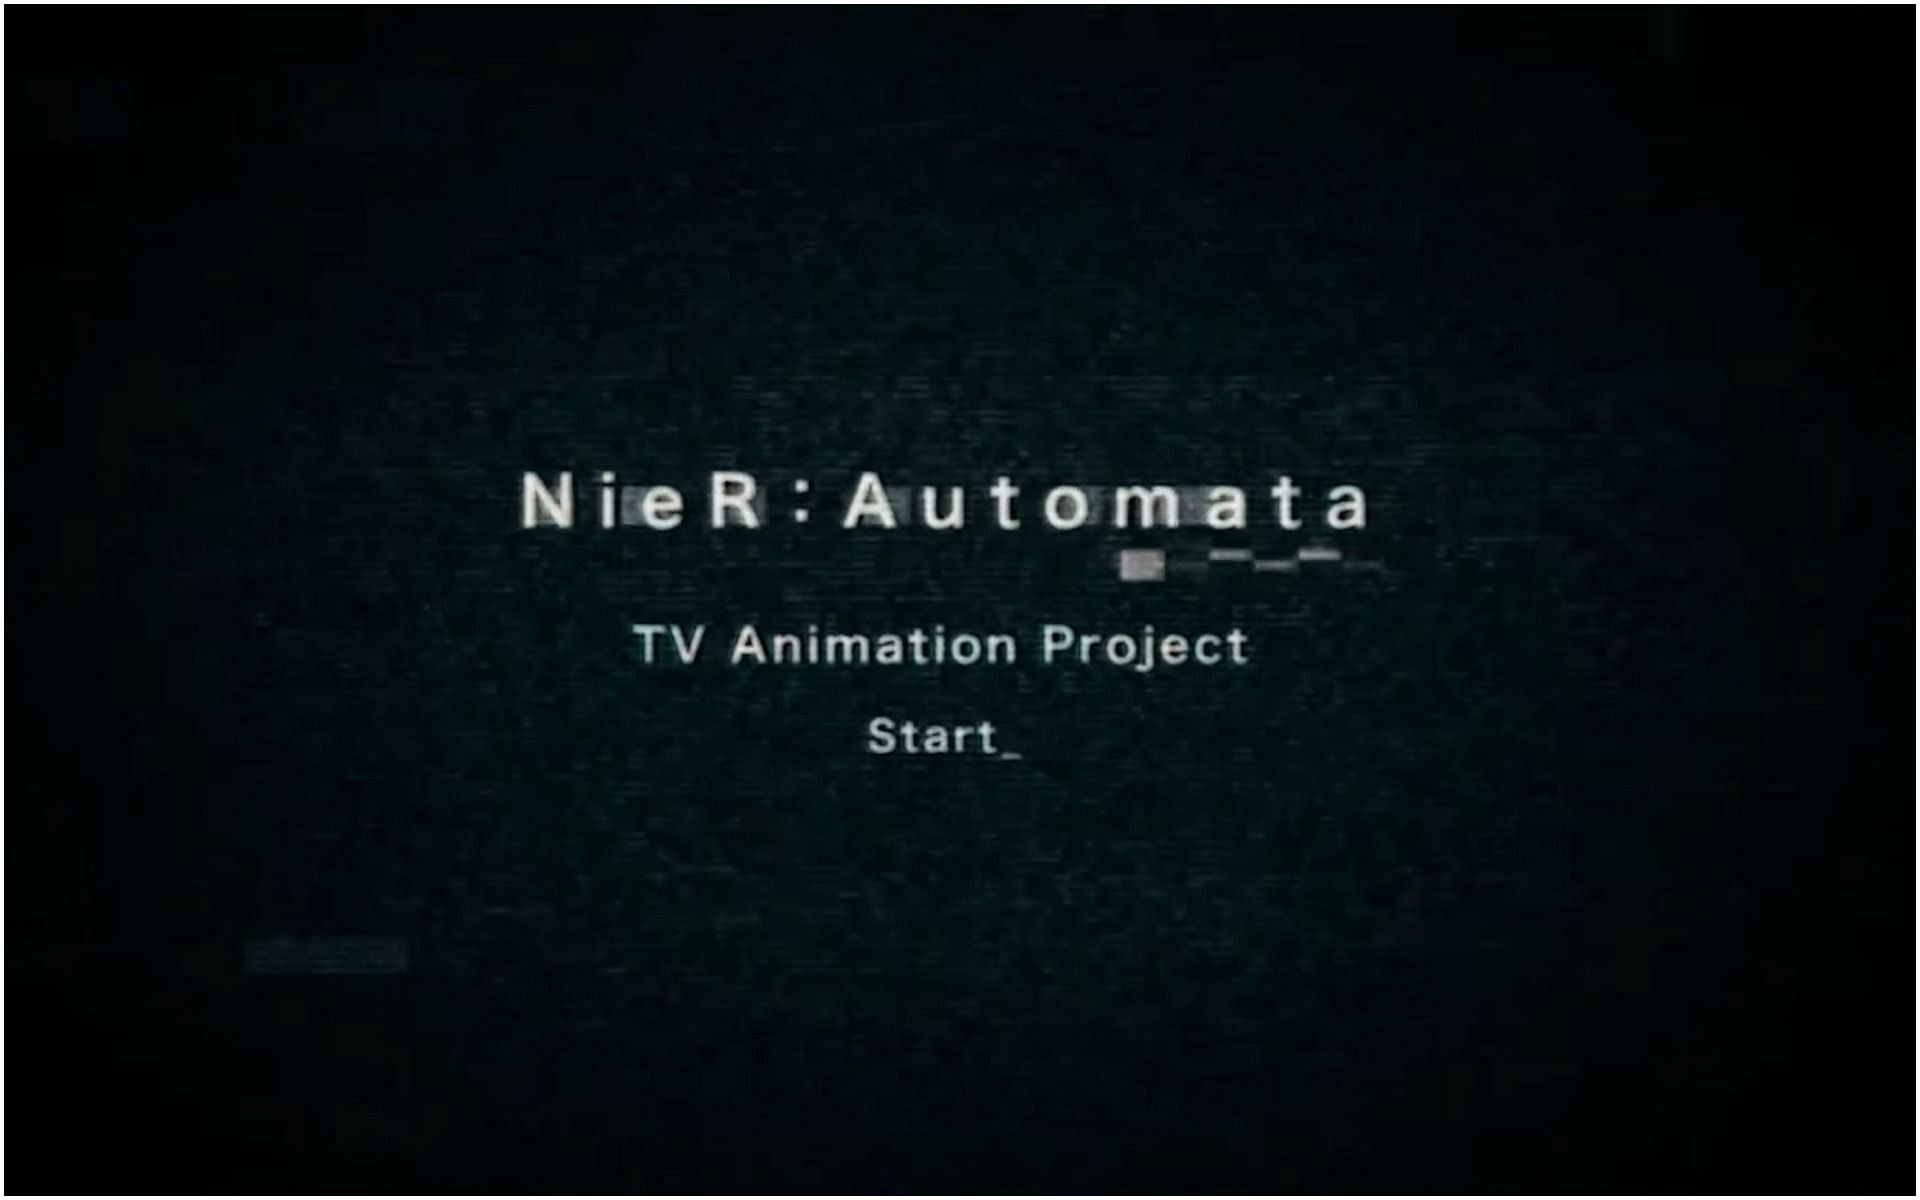 Popular JRPG title NieR: Automata is getting an anime adaptation (Image via Square Enix)